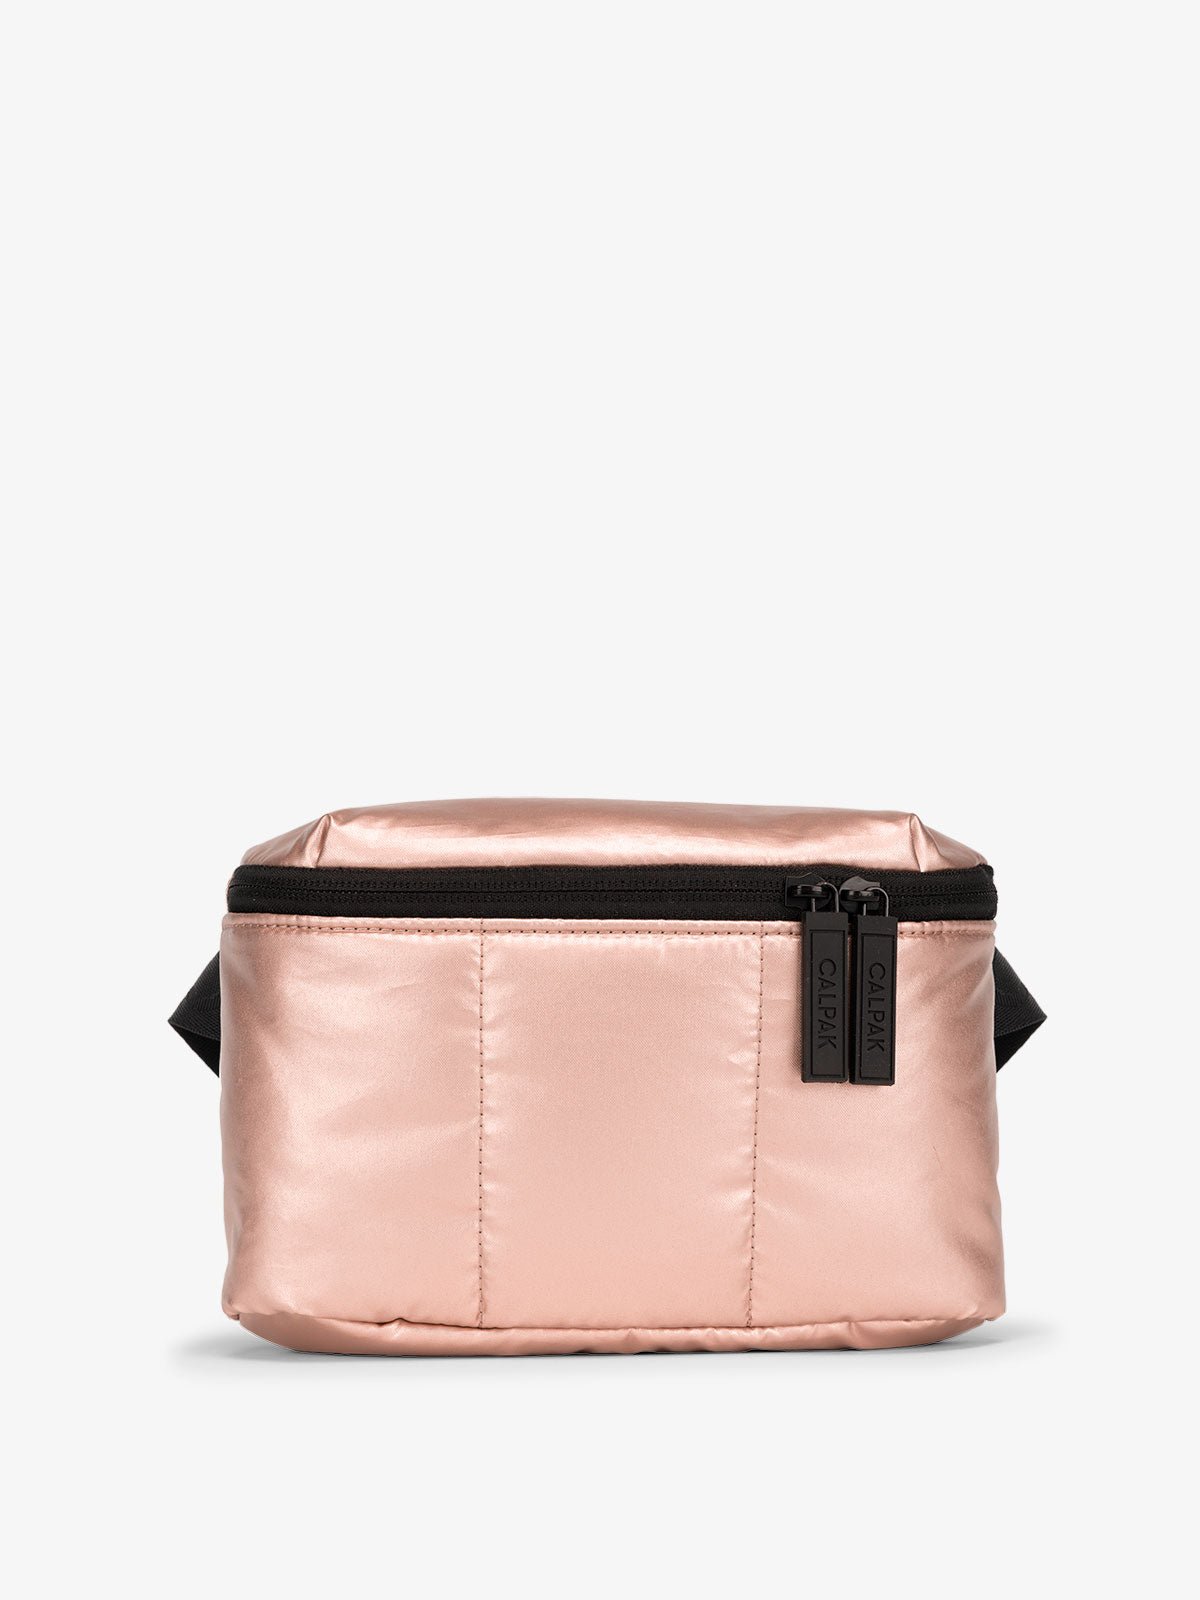 CALPAK Luka Mini Belt Bag with soft puffy exterior in metallic rose gold